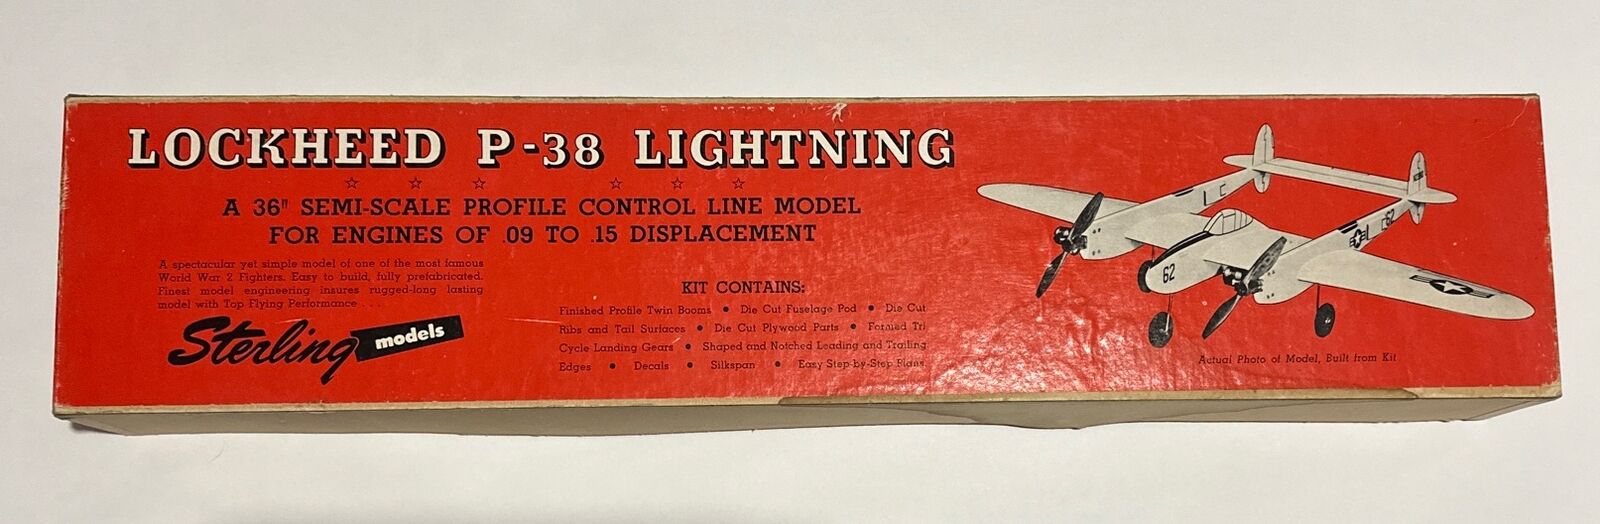 Sterling Models Lockheed P-38 Lightning Kit Complete ￼ STERLING